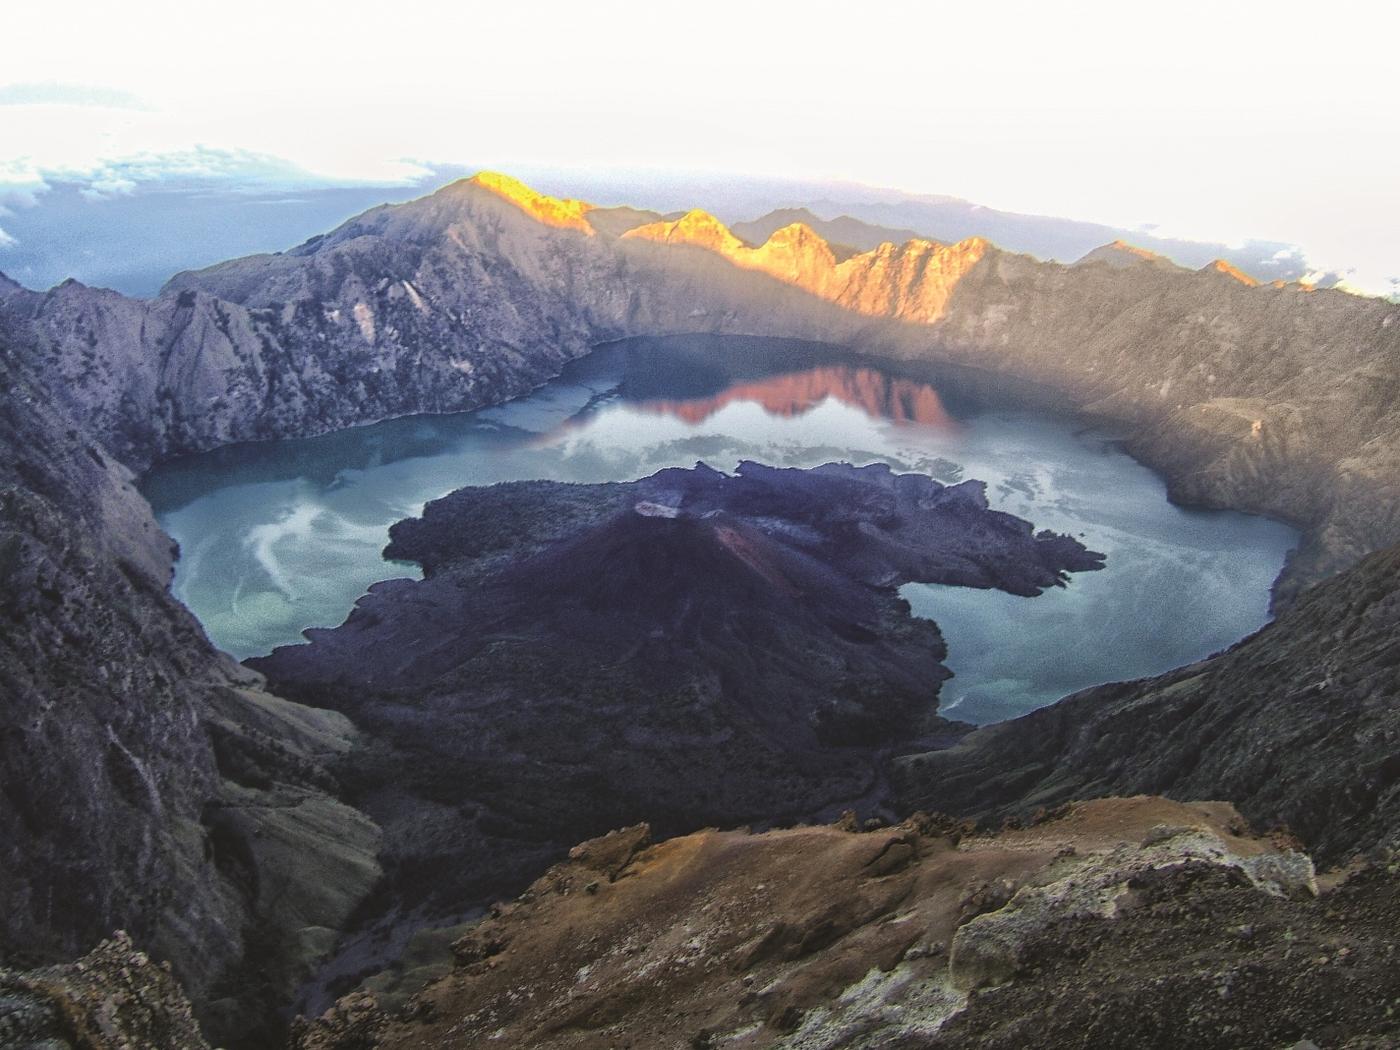 Sumber: https://upload.wikimedia.org/wikipedia/commons/7/78/Rinjani_Volcano%2C_Lombok.JPG